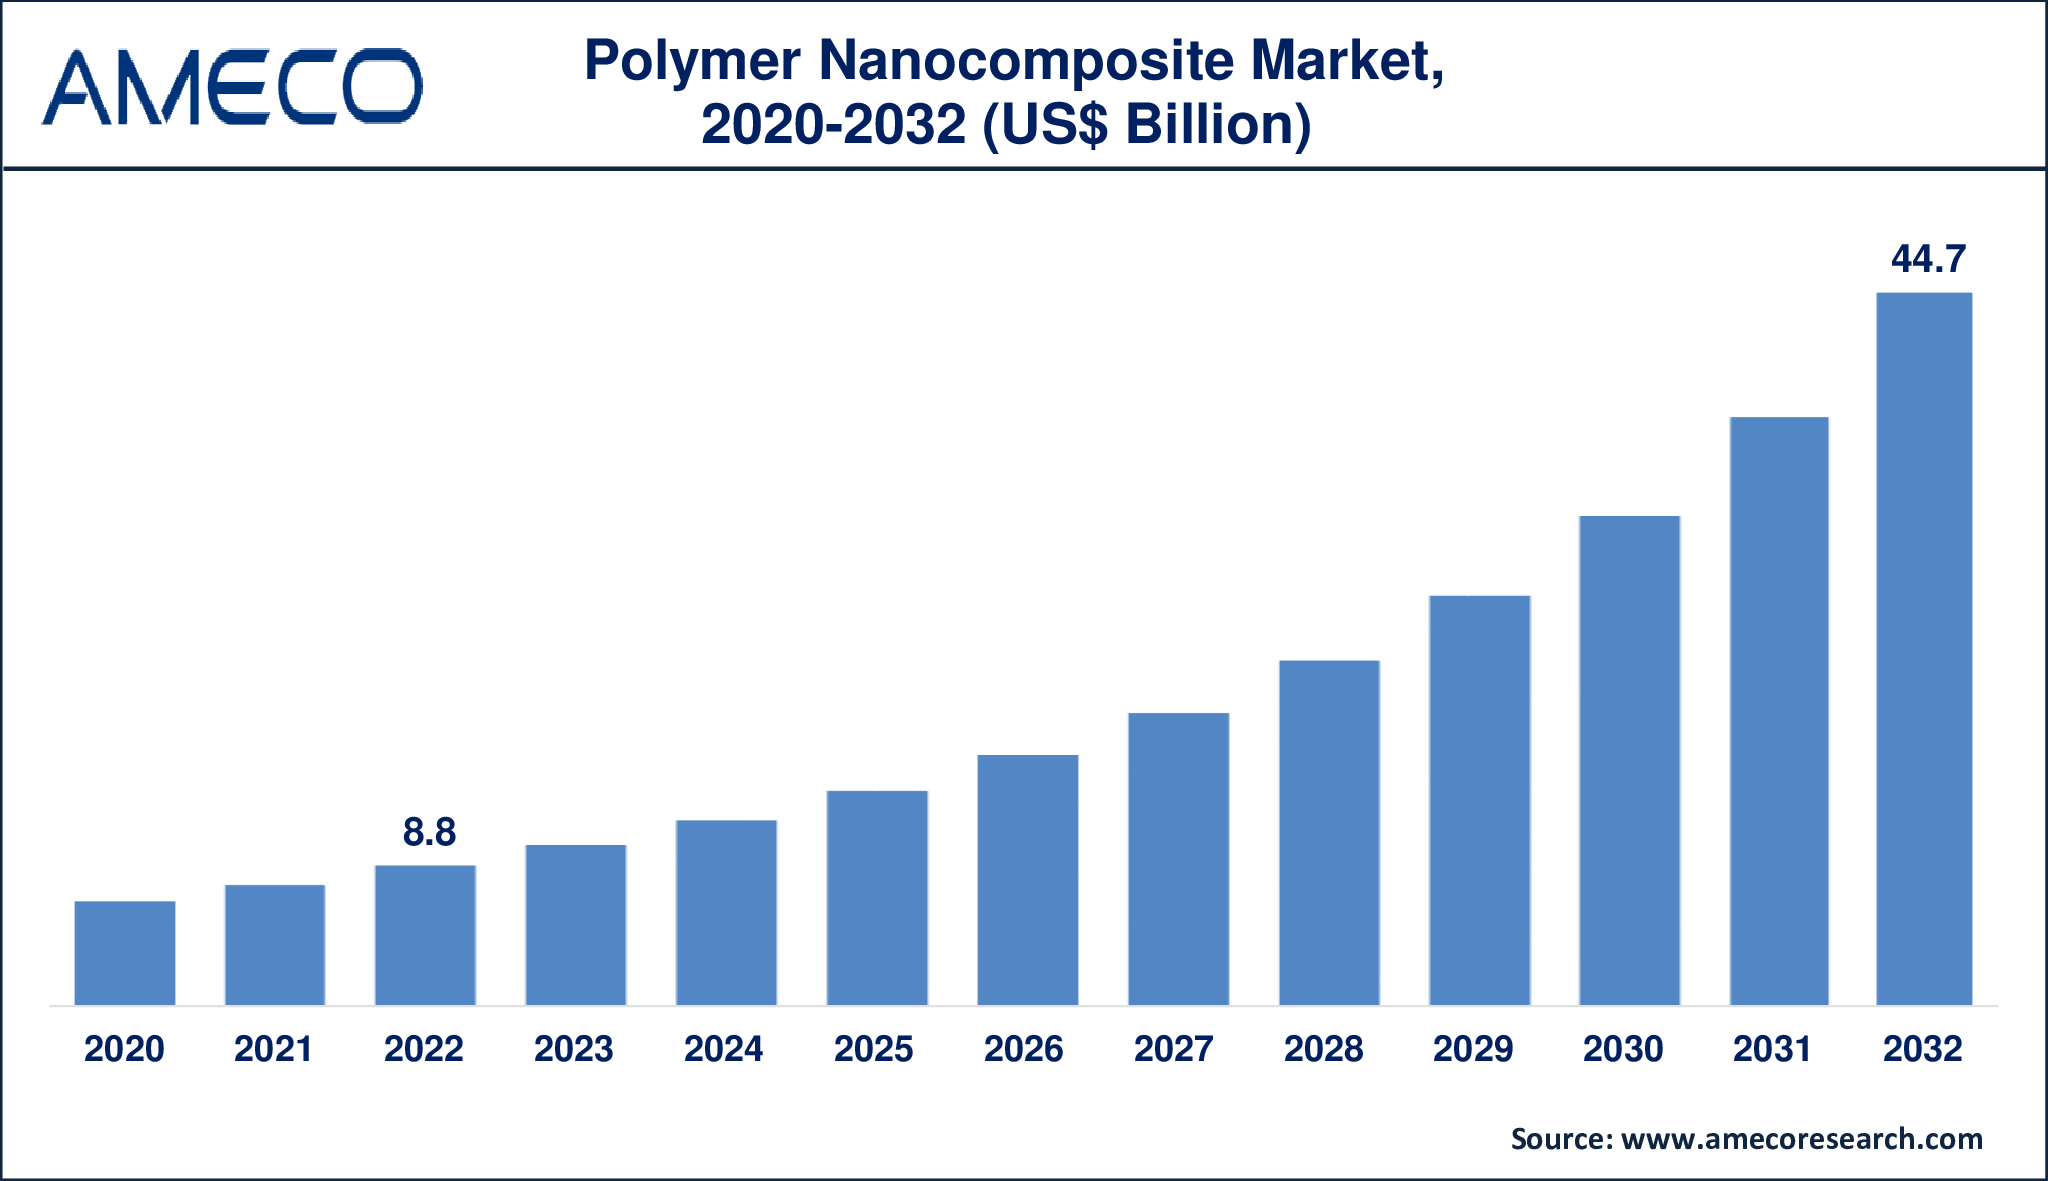 Polymer Nanocomposite Market Dynamics